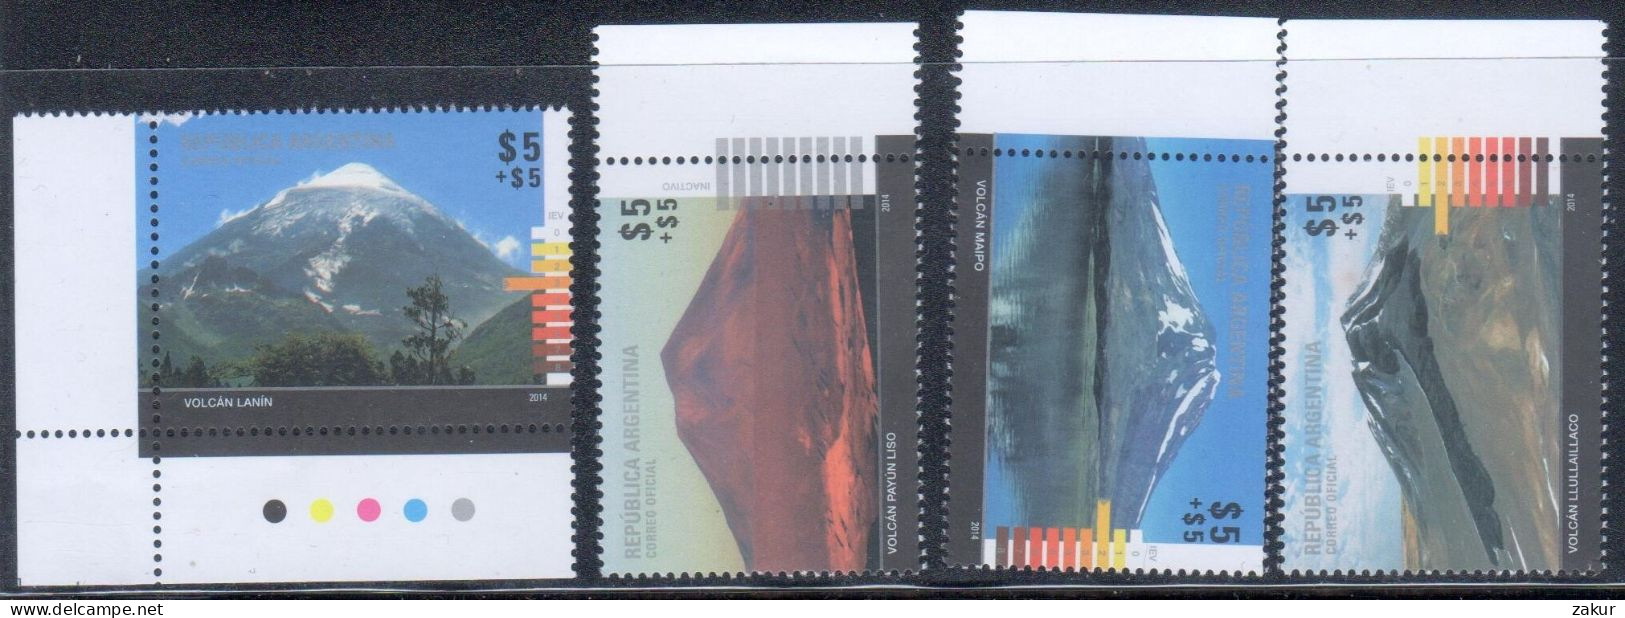 Argentina - Serie Volcanes - Unused Stamps